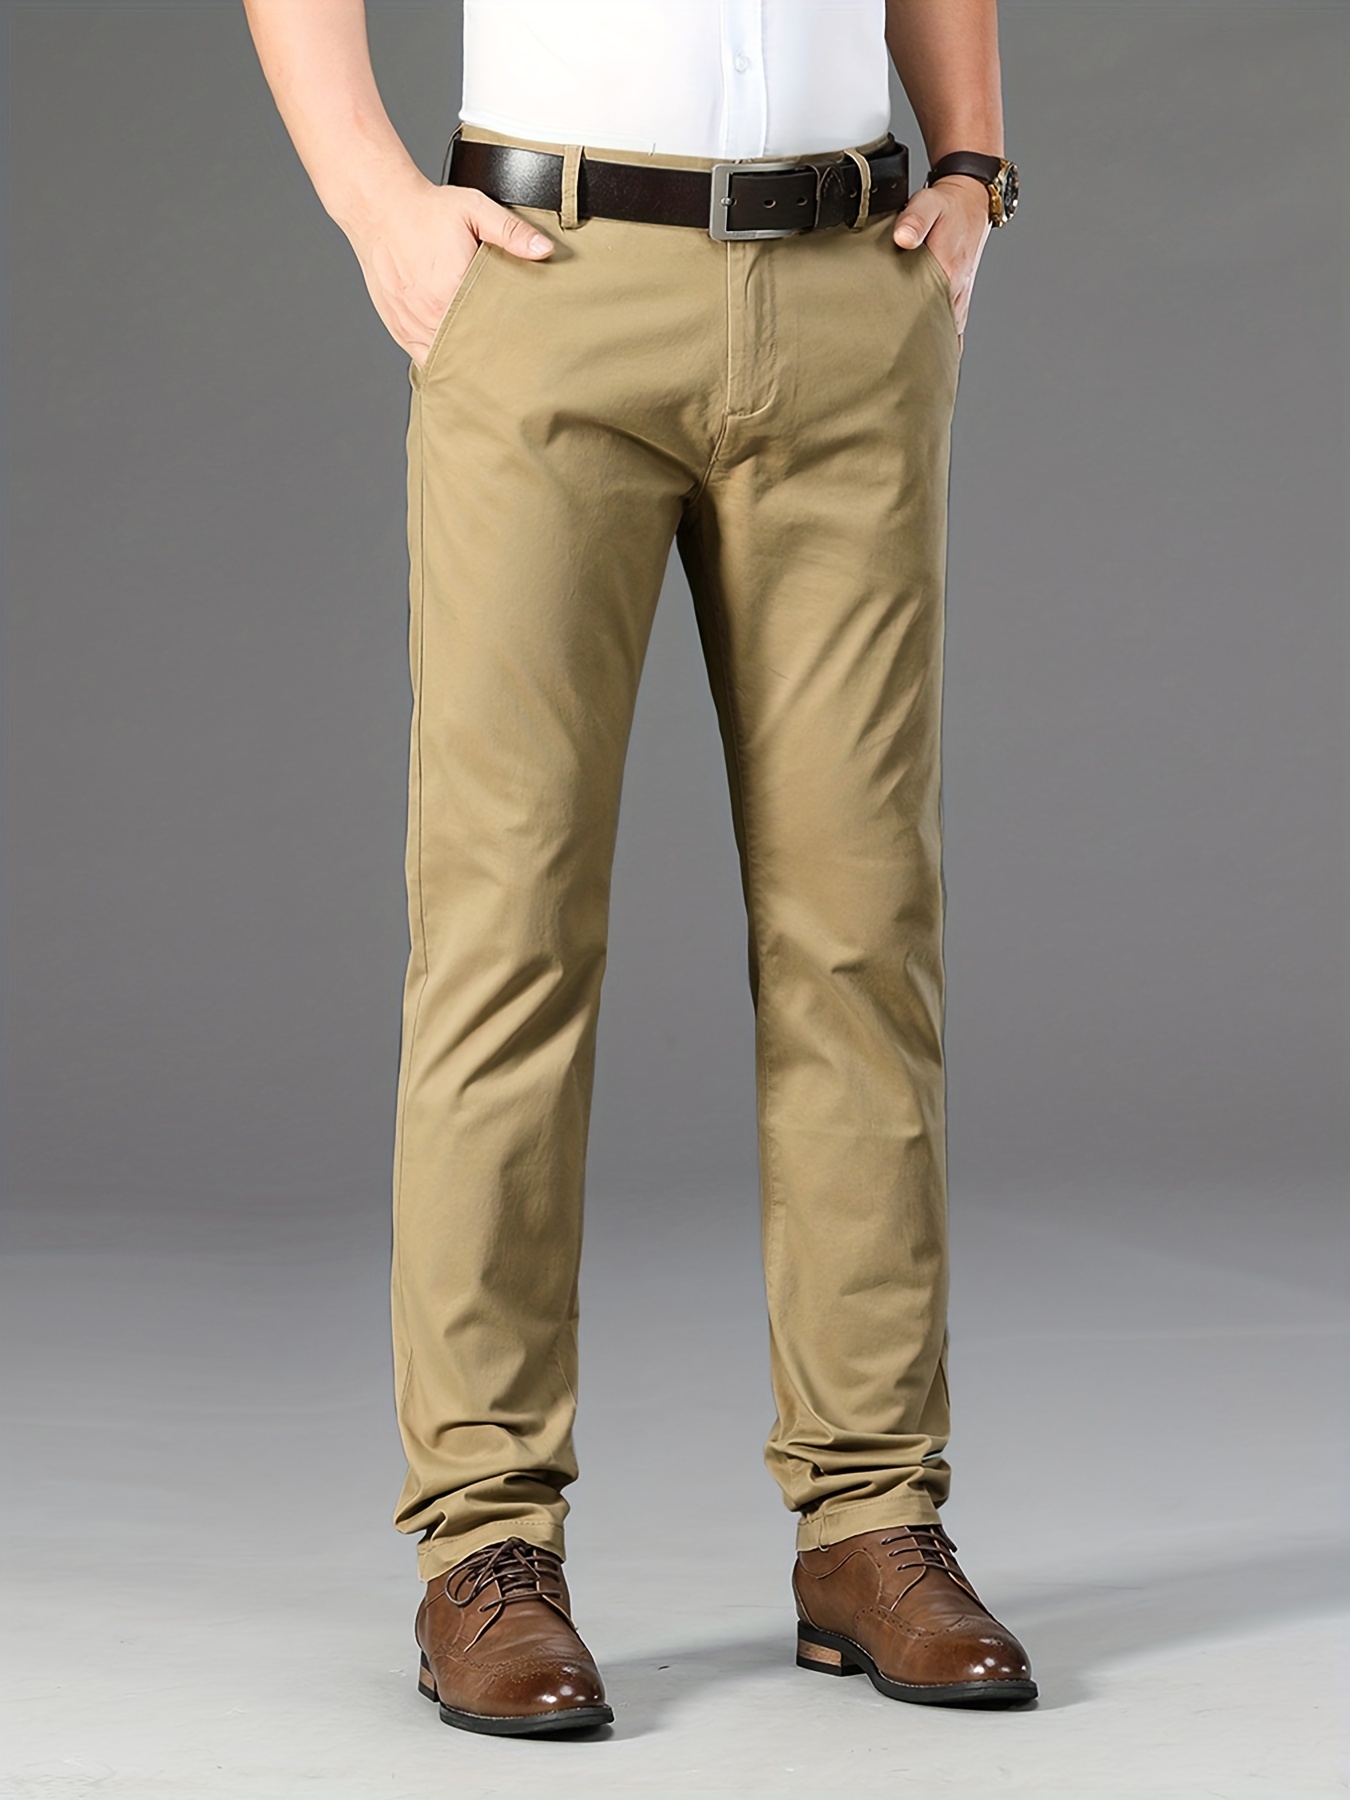 Men's Formal Trouser Slim Fit Plain Front Cross Pocket Color: 907(45 KHAKI  Color) - FIT ELEGANCE